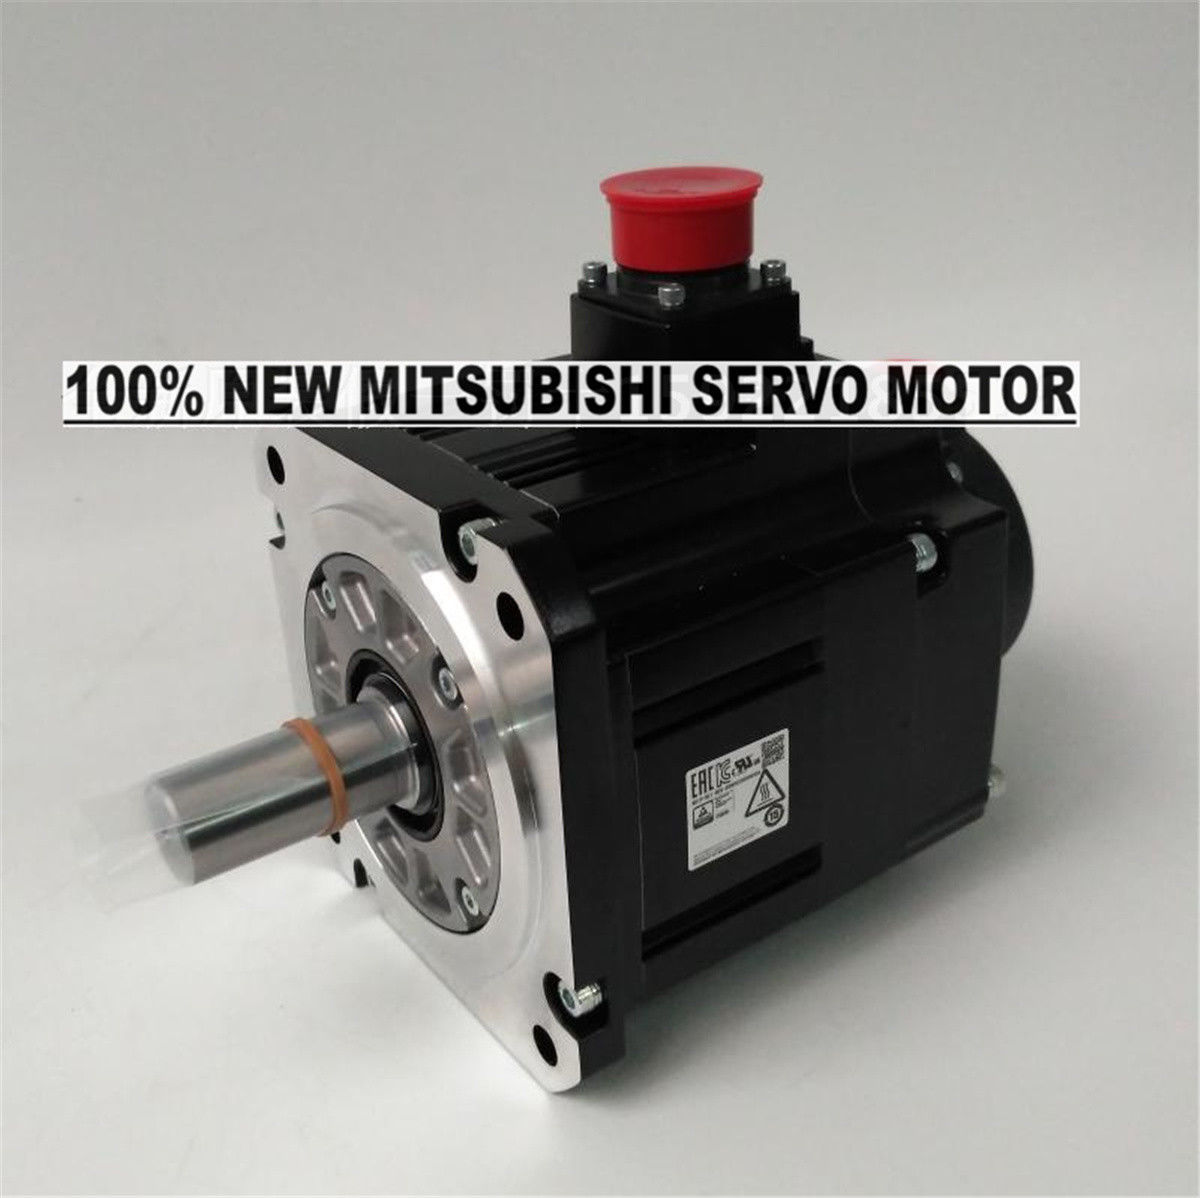 NEW Mitsubishi Servo Motor HG-SR102BJ in box HGSR102BJ - Click Image to Close